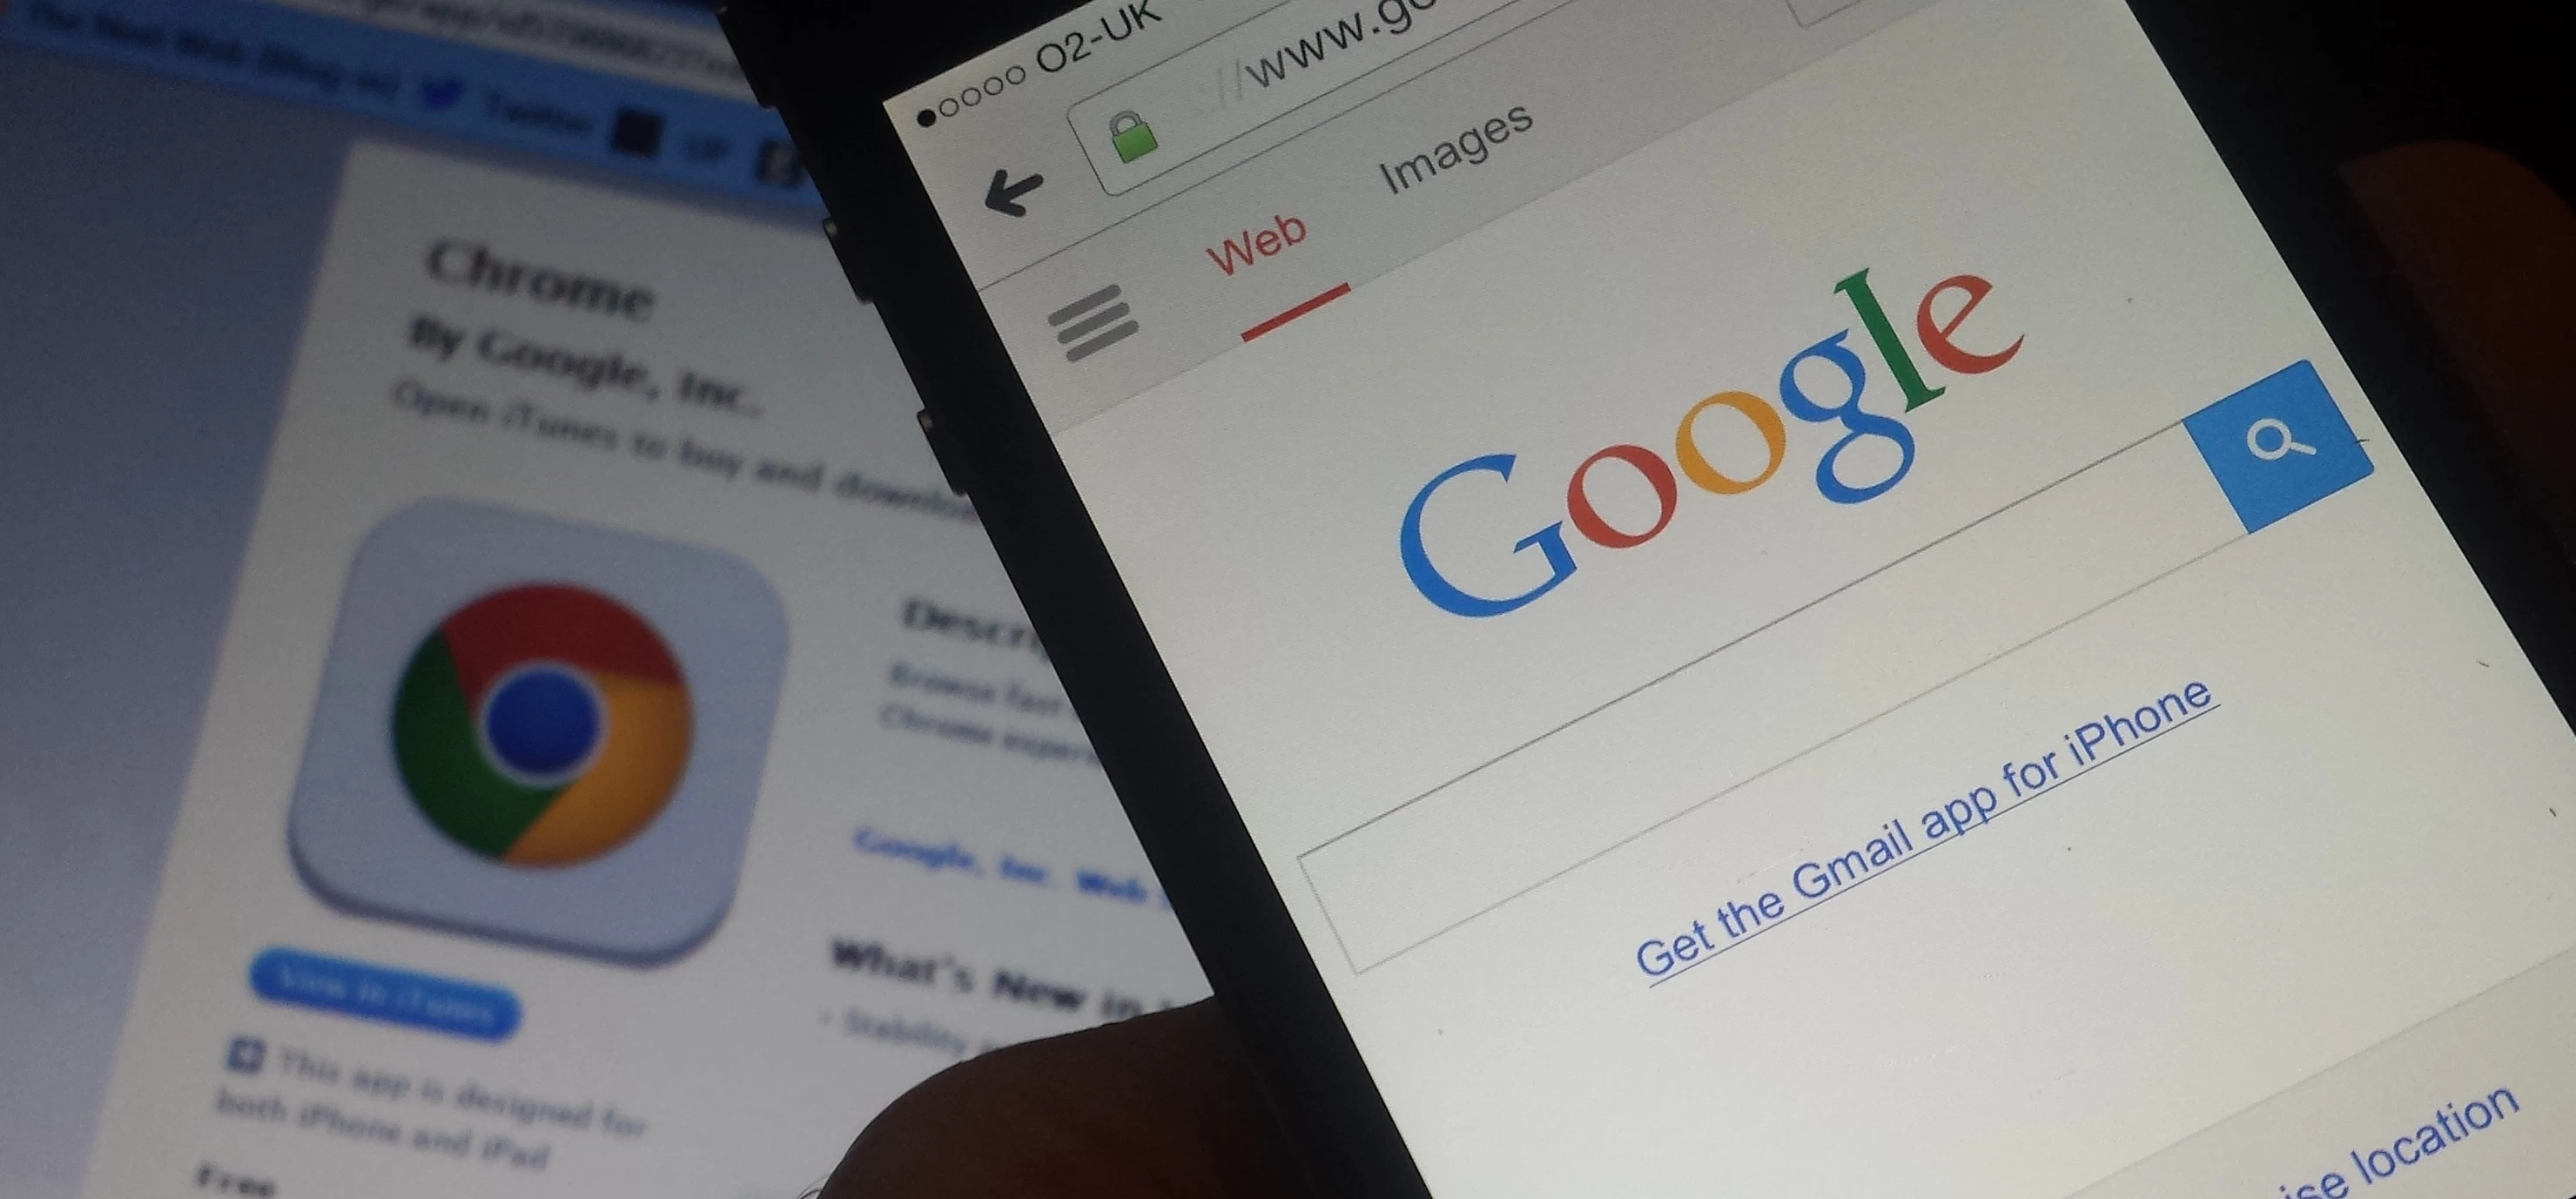 Google Chrome Mobile iOS | App Store | Google ปล่อยอัพเดท Chrome บน iOS เพิ่มความเสถียรลดอาการ Crash และลดการใช้ Data